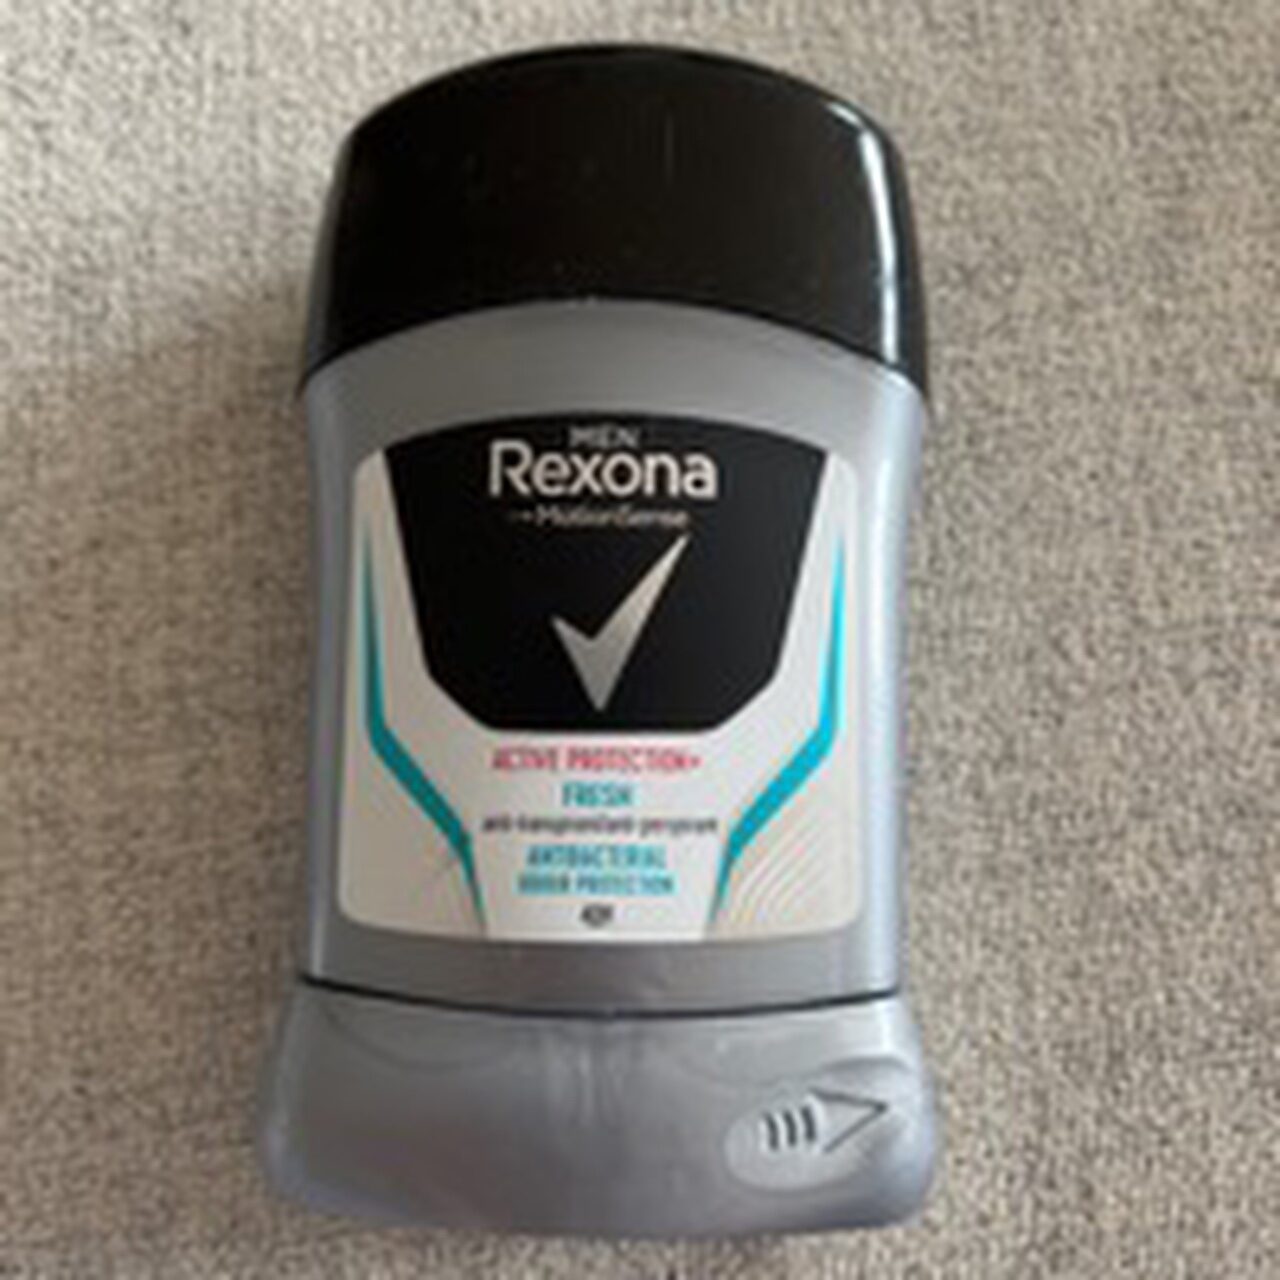 Rexona active protection+ - Product - de